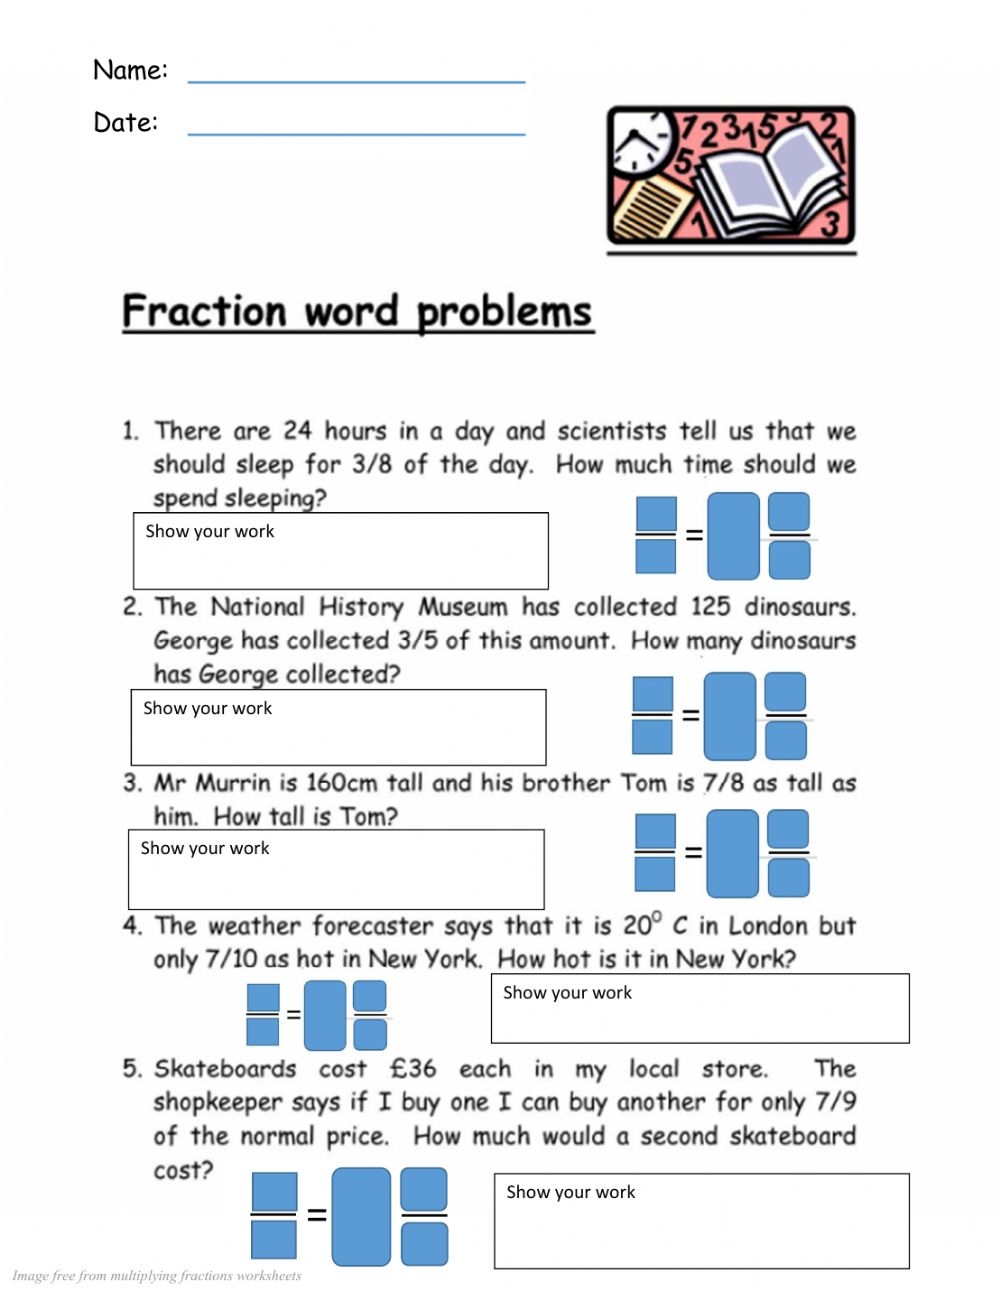 Multiplying Fractions Word Problems Worksheet